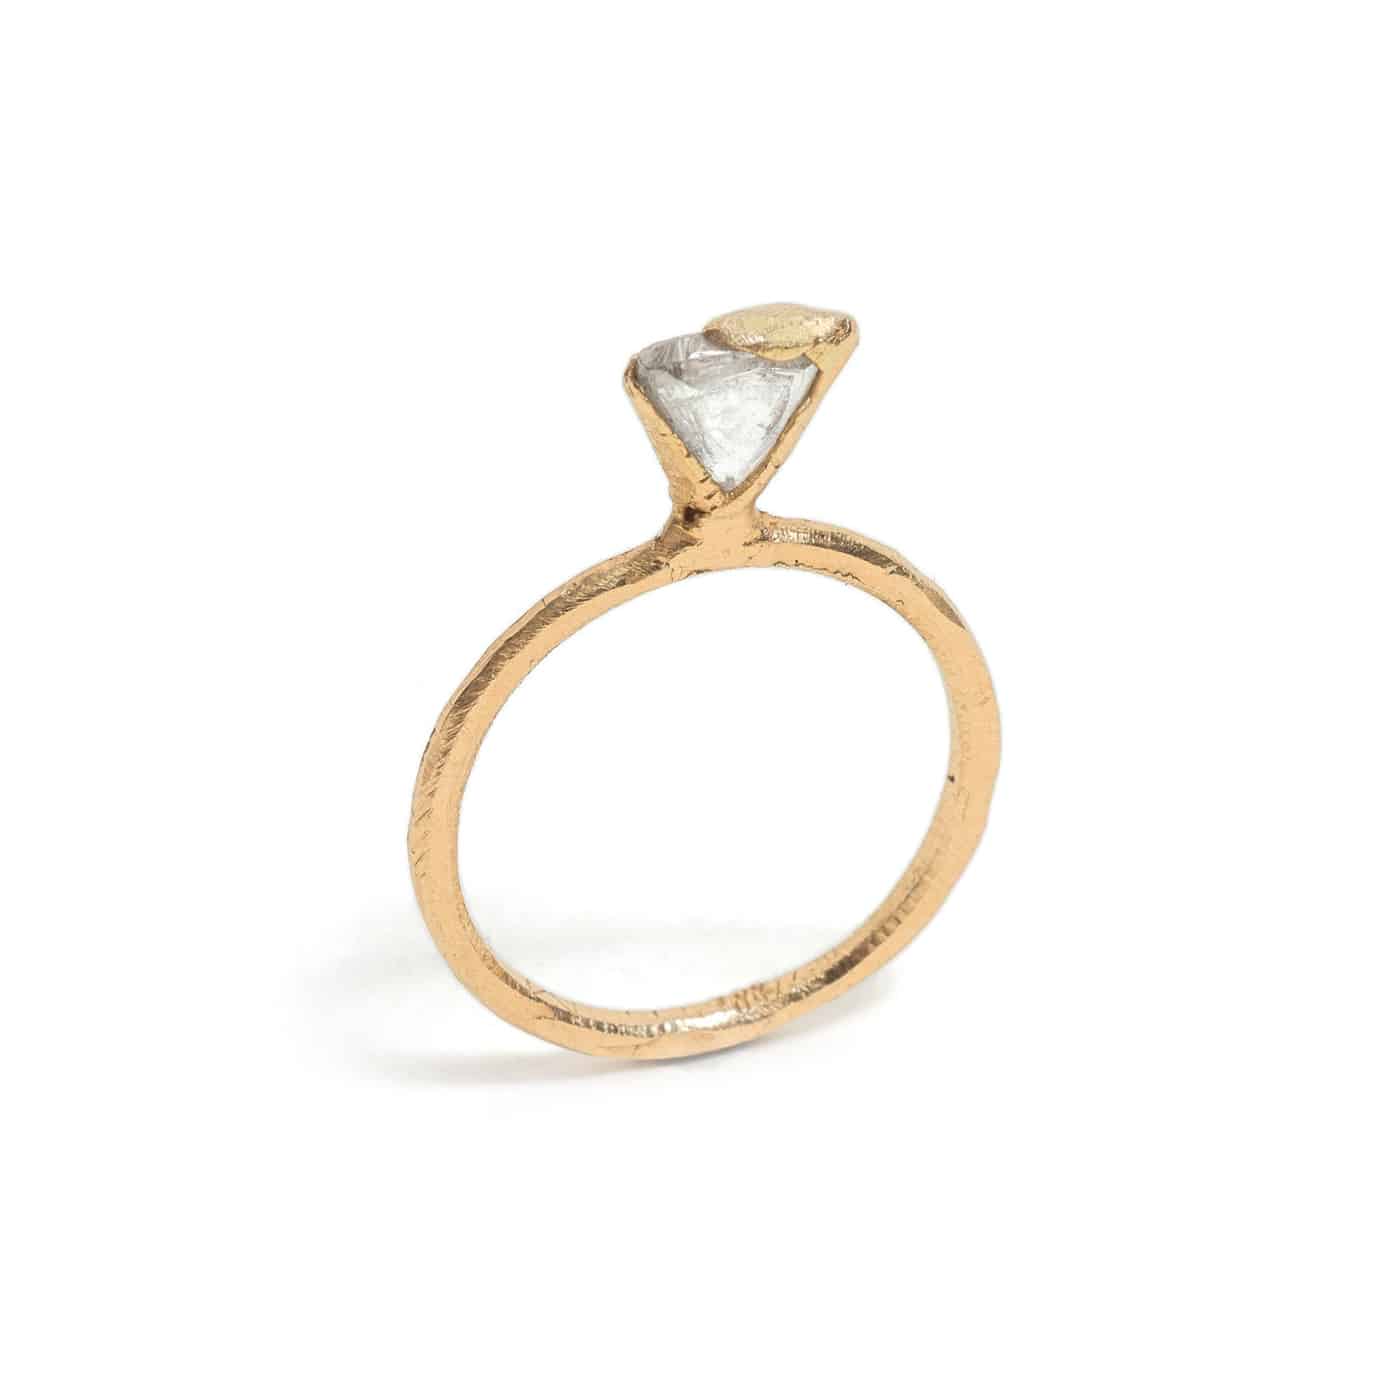 Unique engagement rings by Australian jewelers / Tessa Blazey